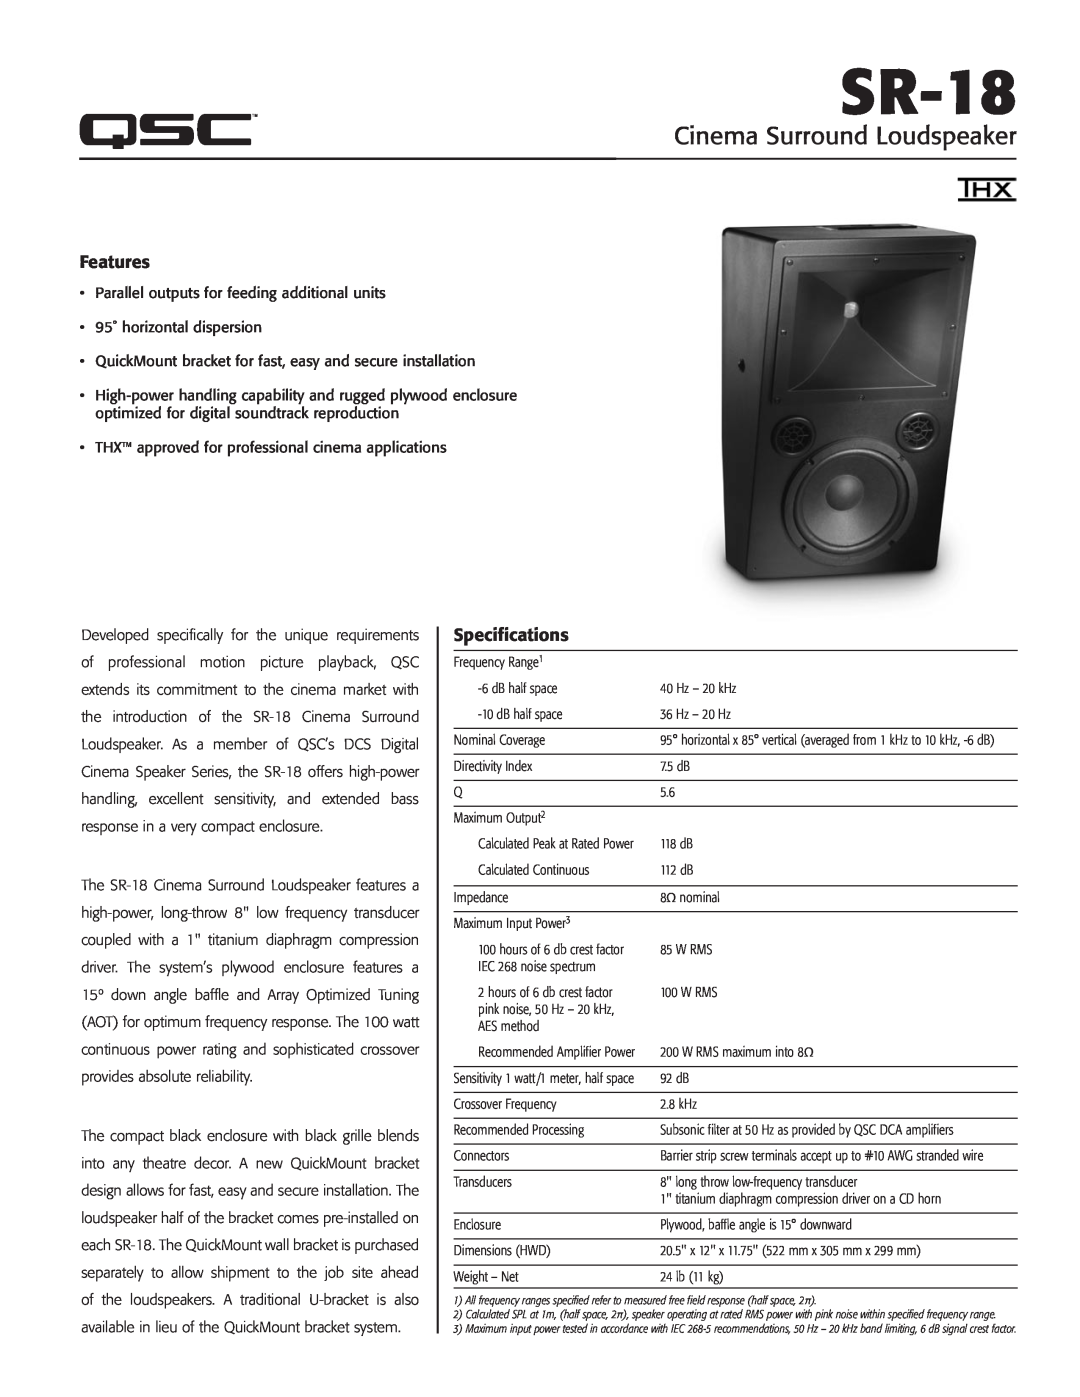 QSC Audio specifications Cinema Loudspeaker Systems User Manual, SR-18 Surround Loudspeaker Introduction, TD-000203-00 